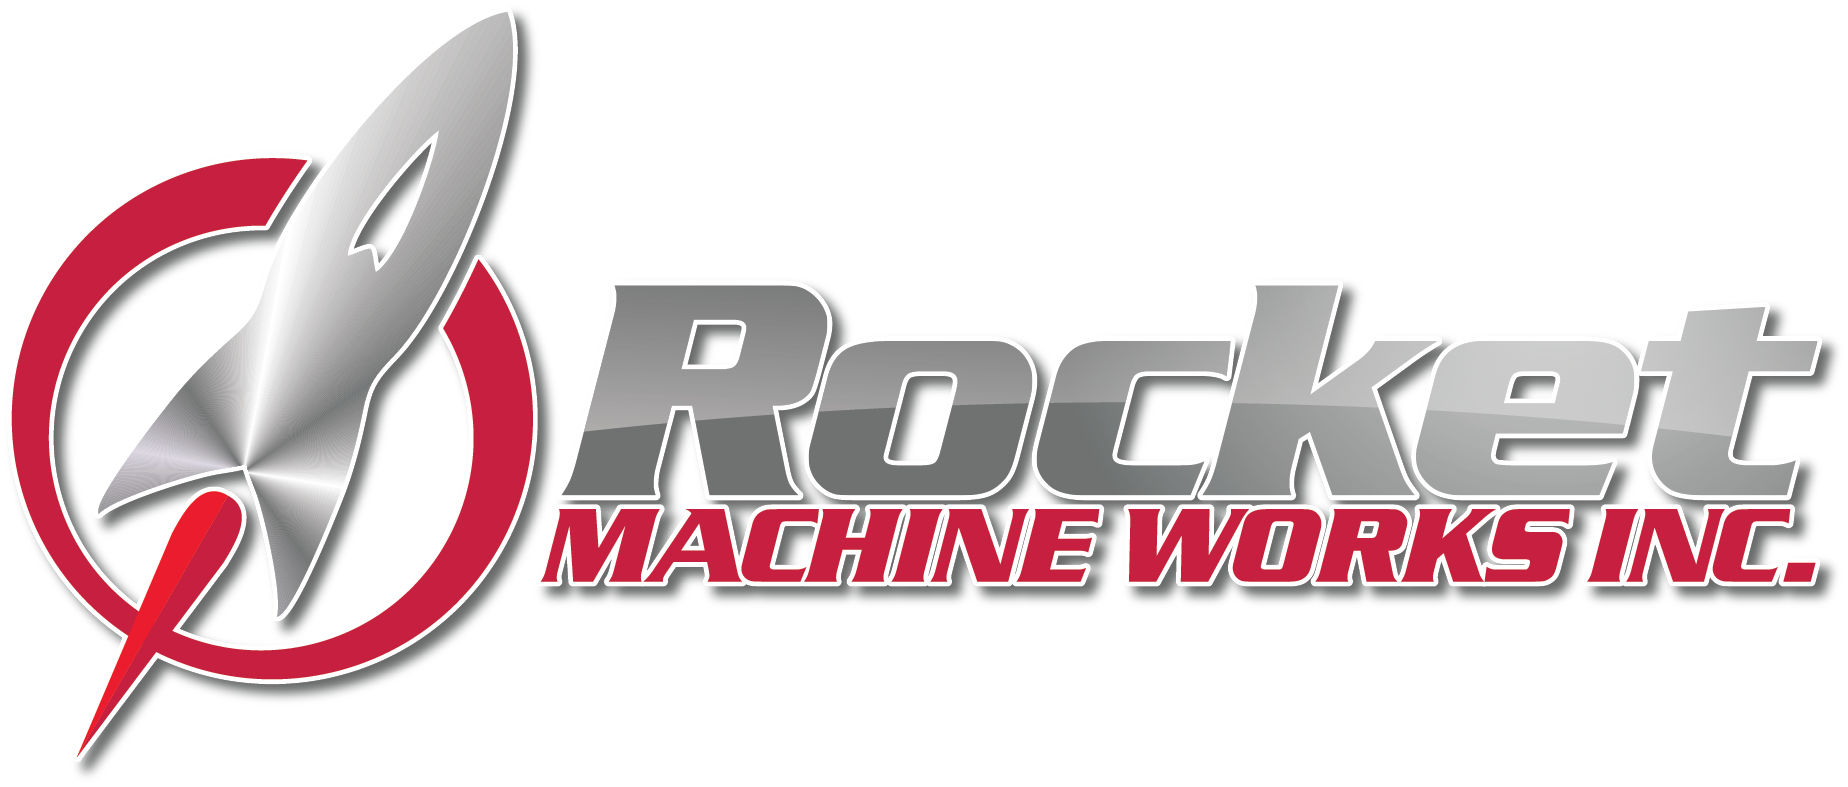 Logo of Rocket Machine Works.